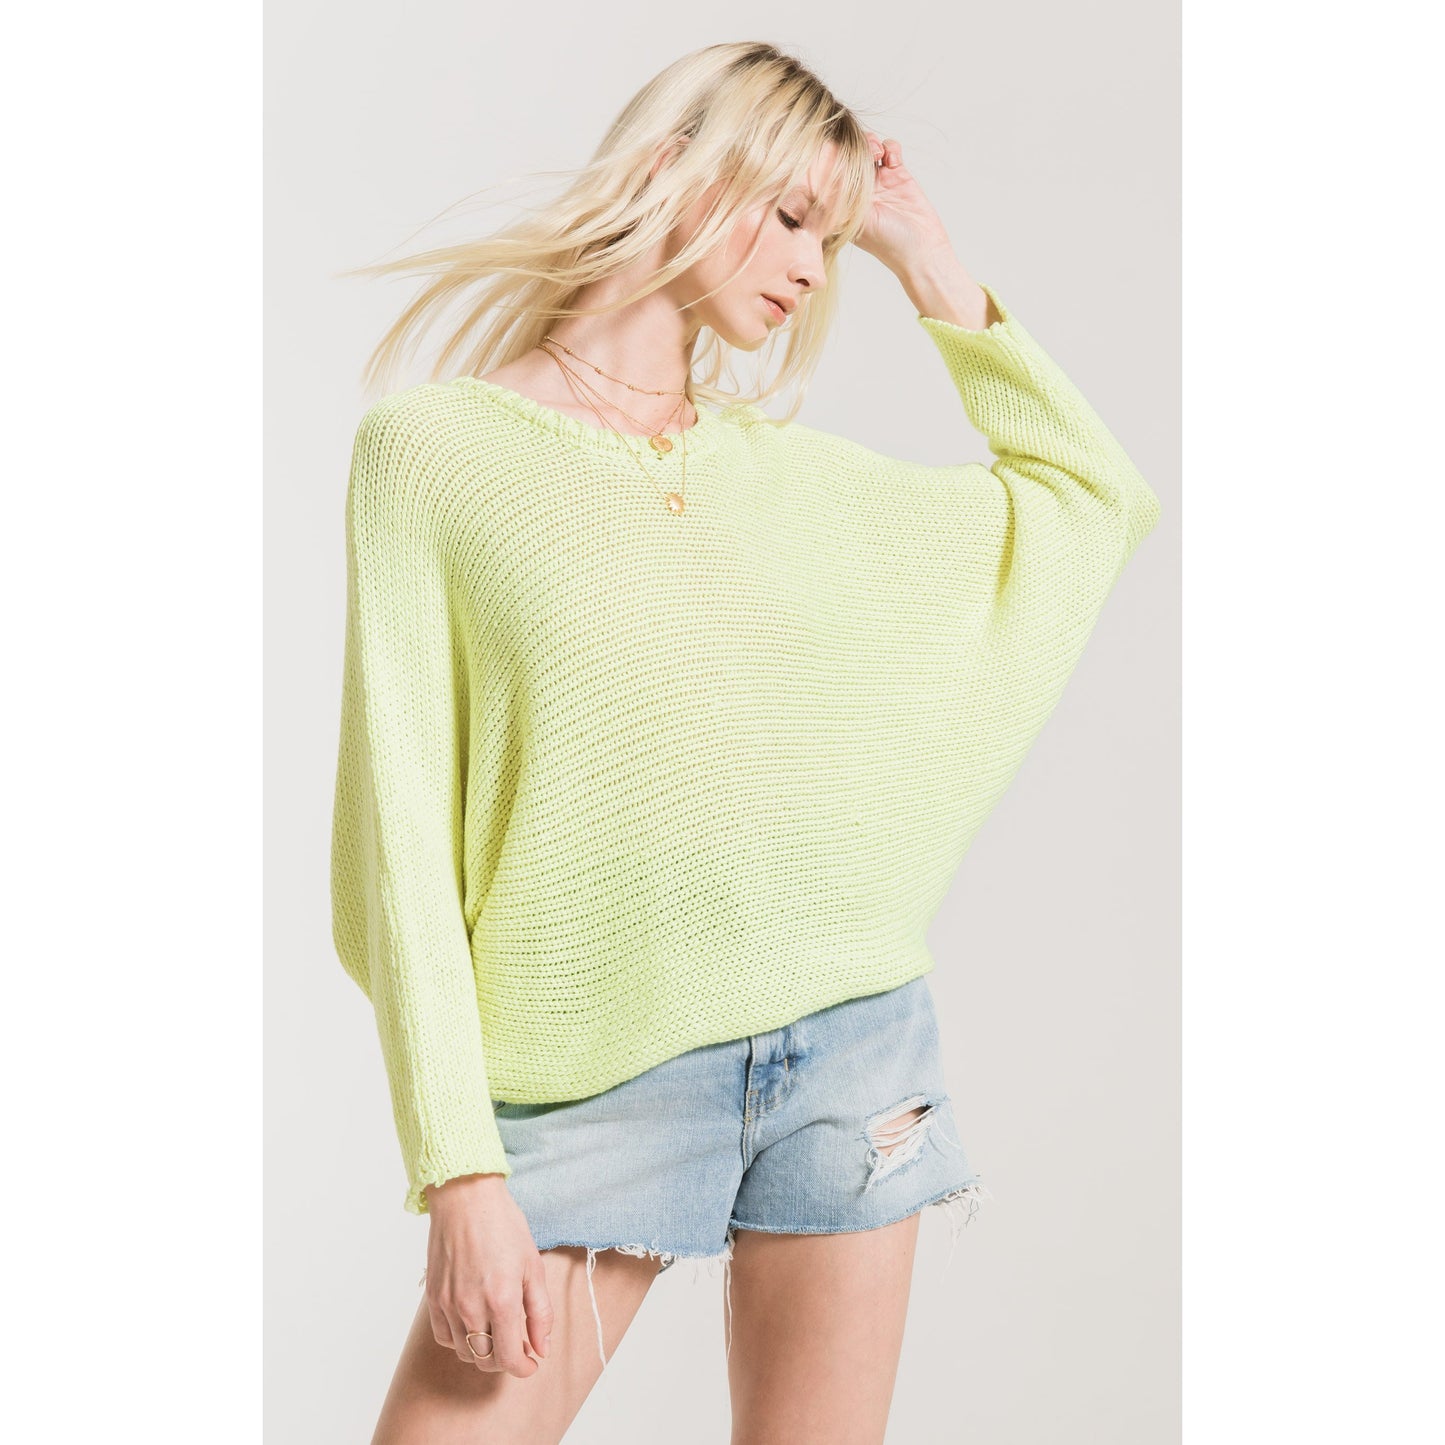 The Neon Cipriani Sweater